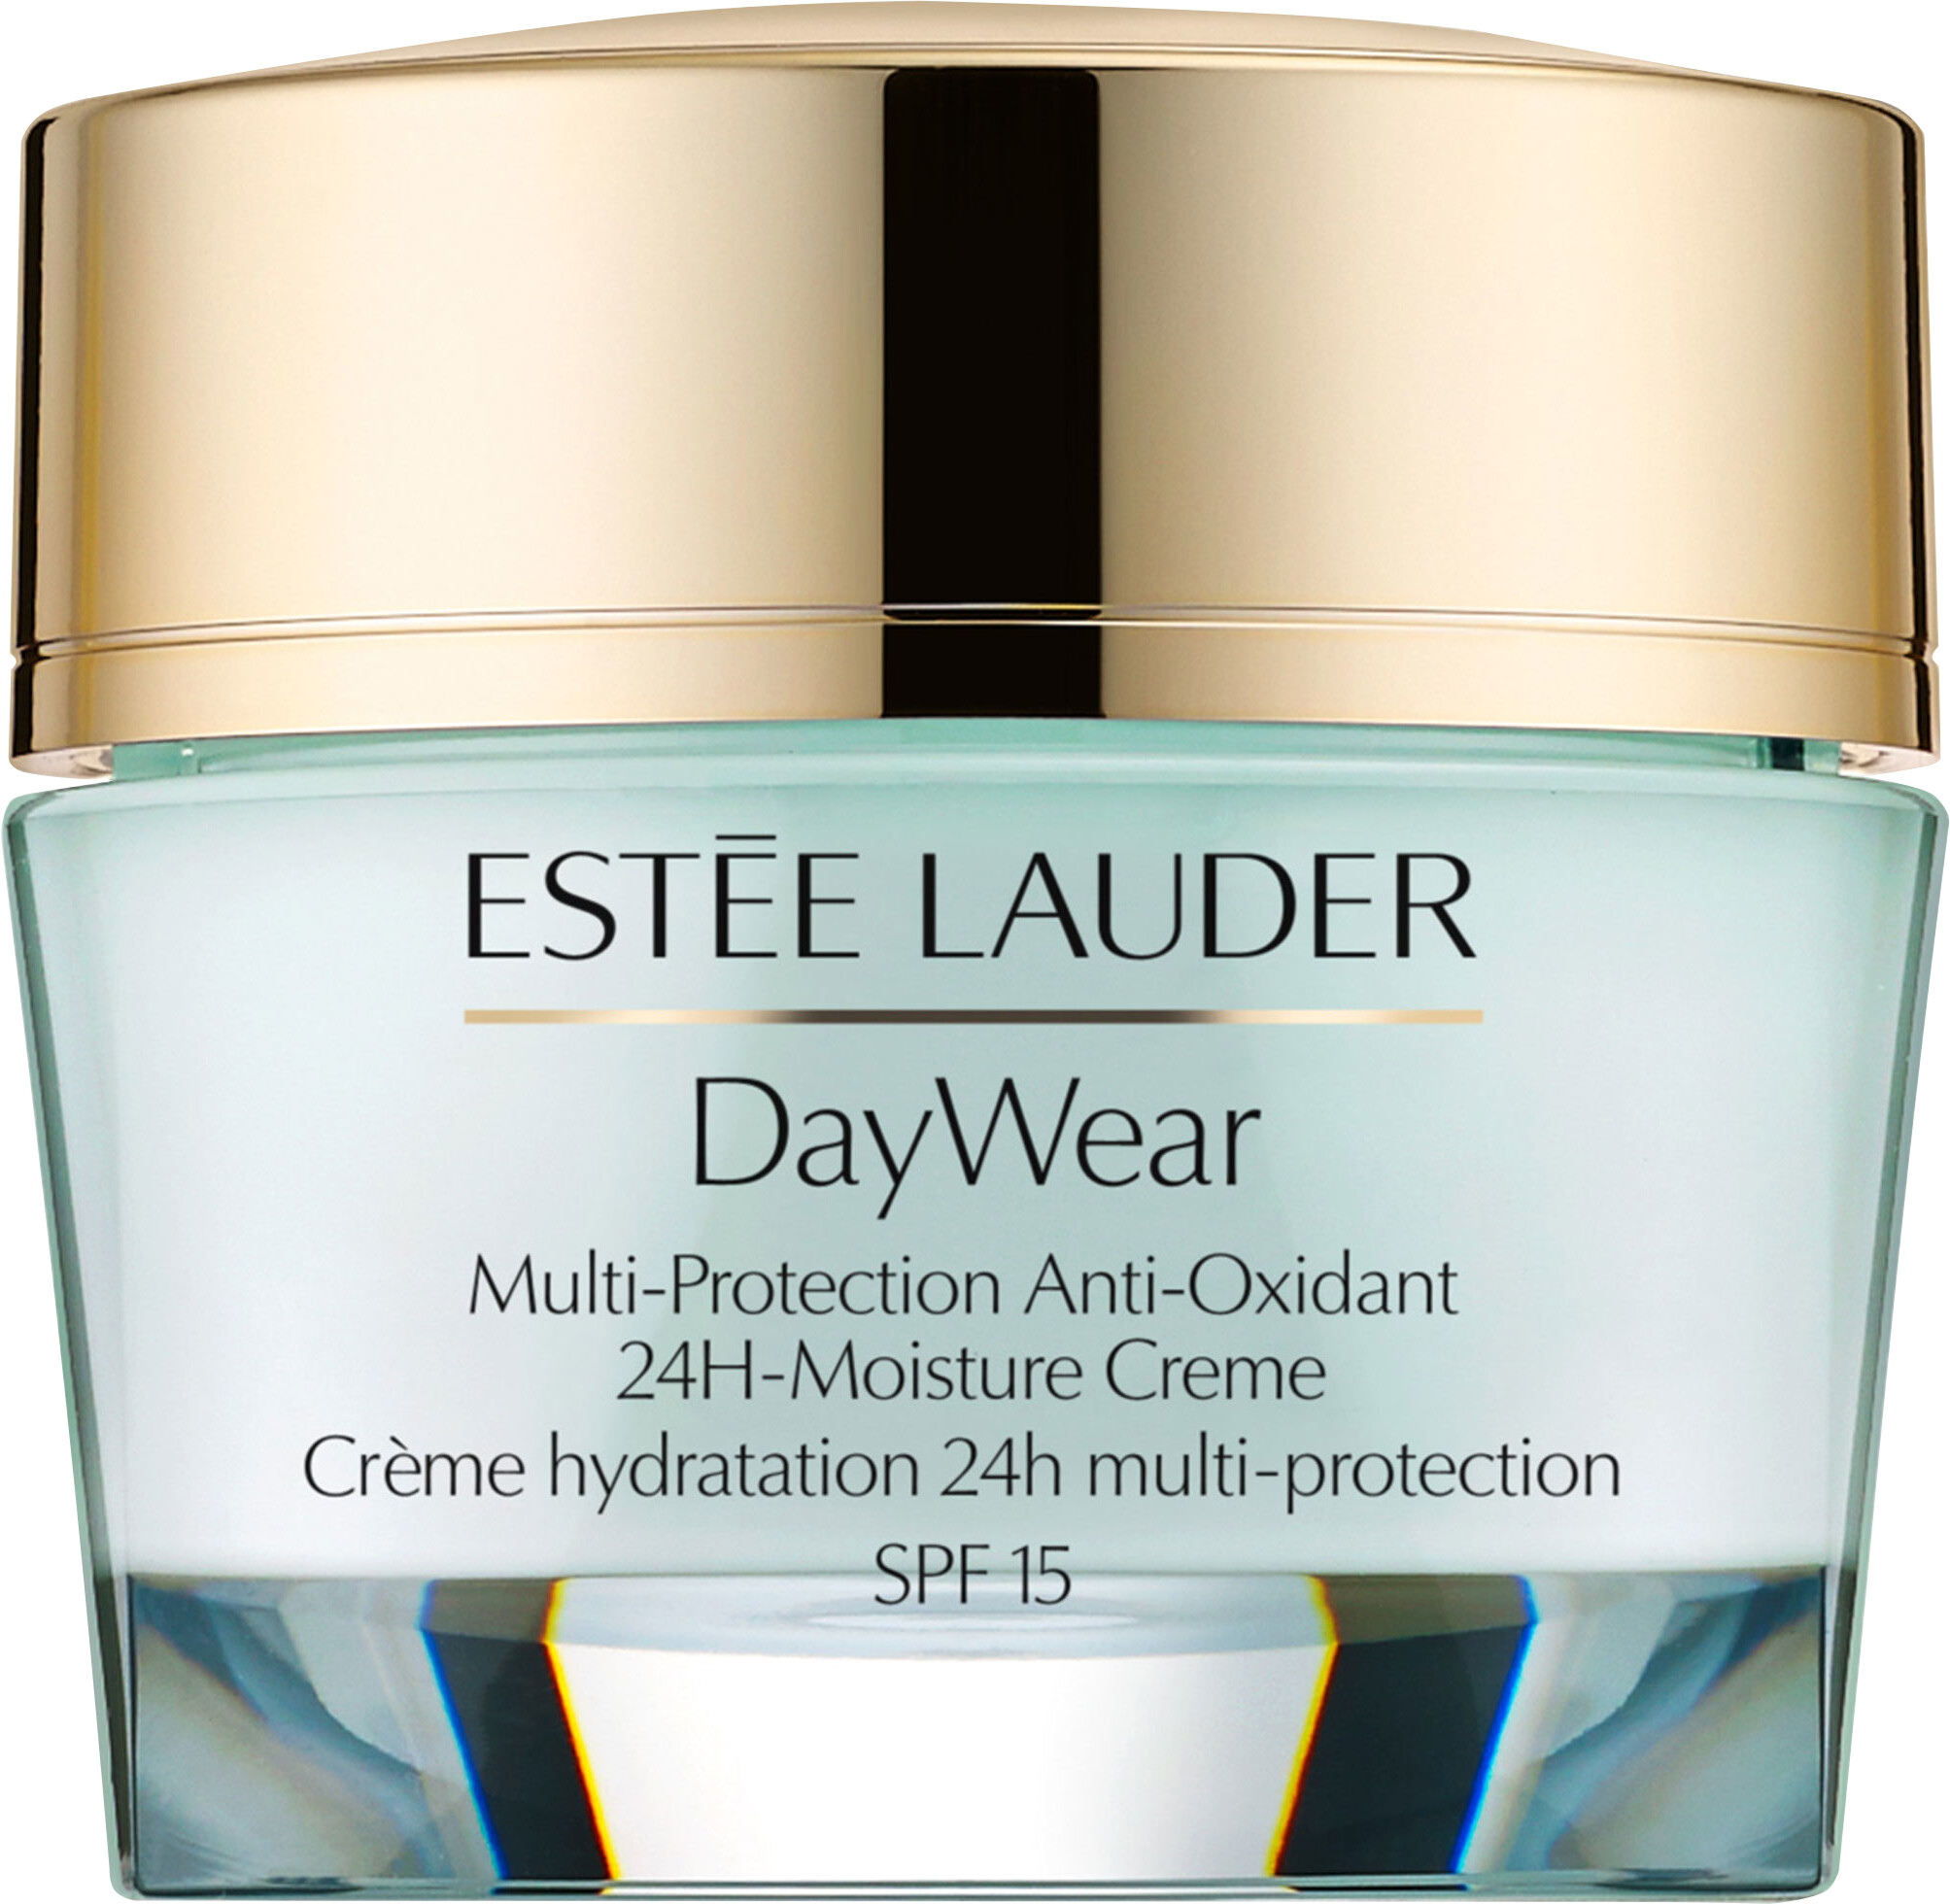 Estee Lauder DayWear Multi-Protection 24H-Moisture Creme SPF15 -  Normal/Combination Skin 30ml